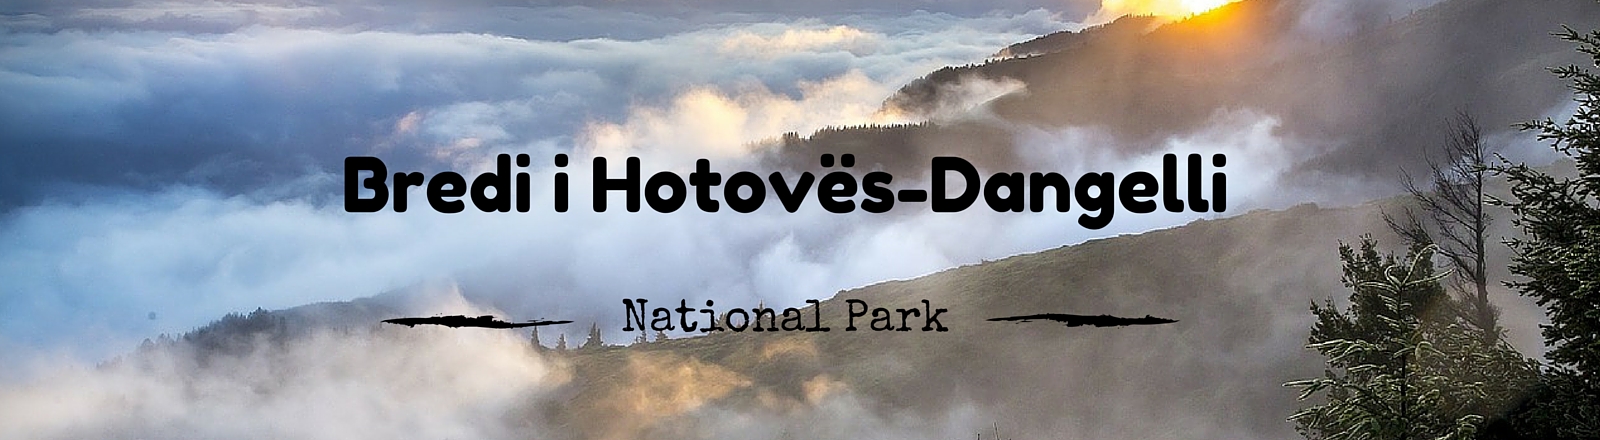 Bredi i Hotovës-Dangelli National Park, National Parks Guy